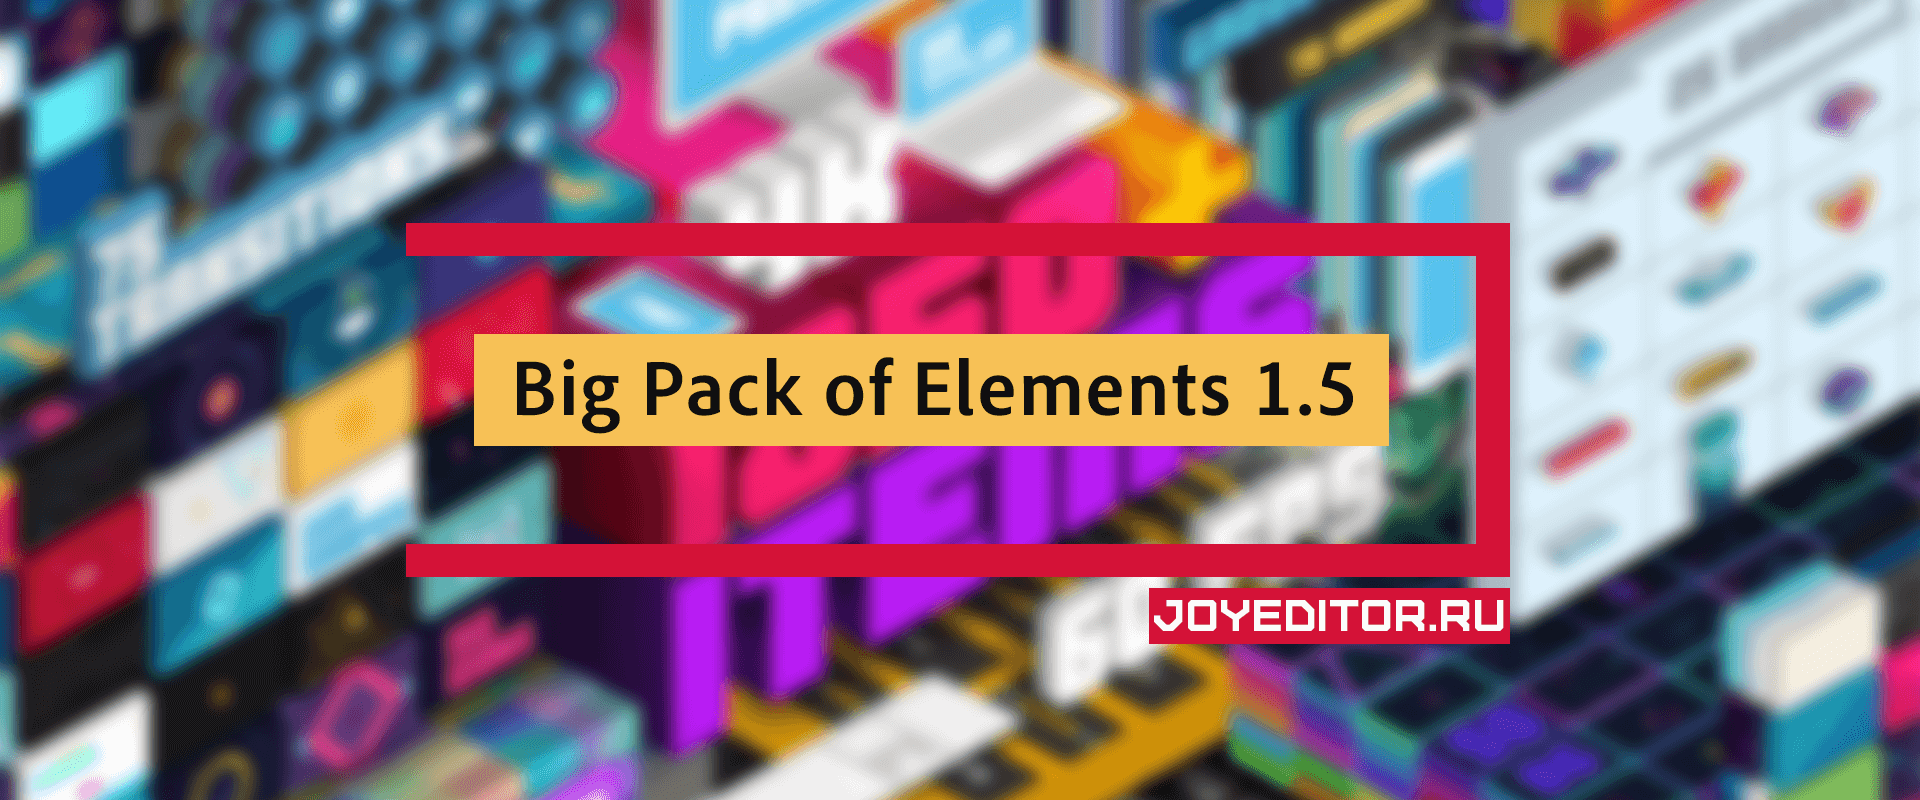 Big Pack of Elements 1.5